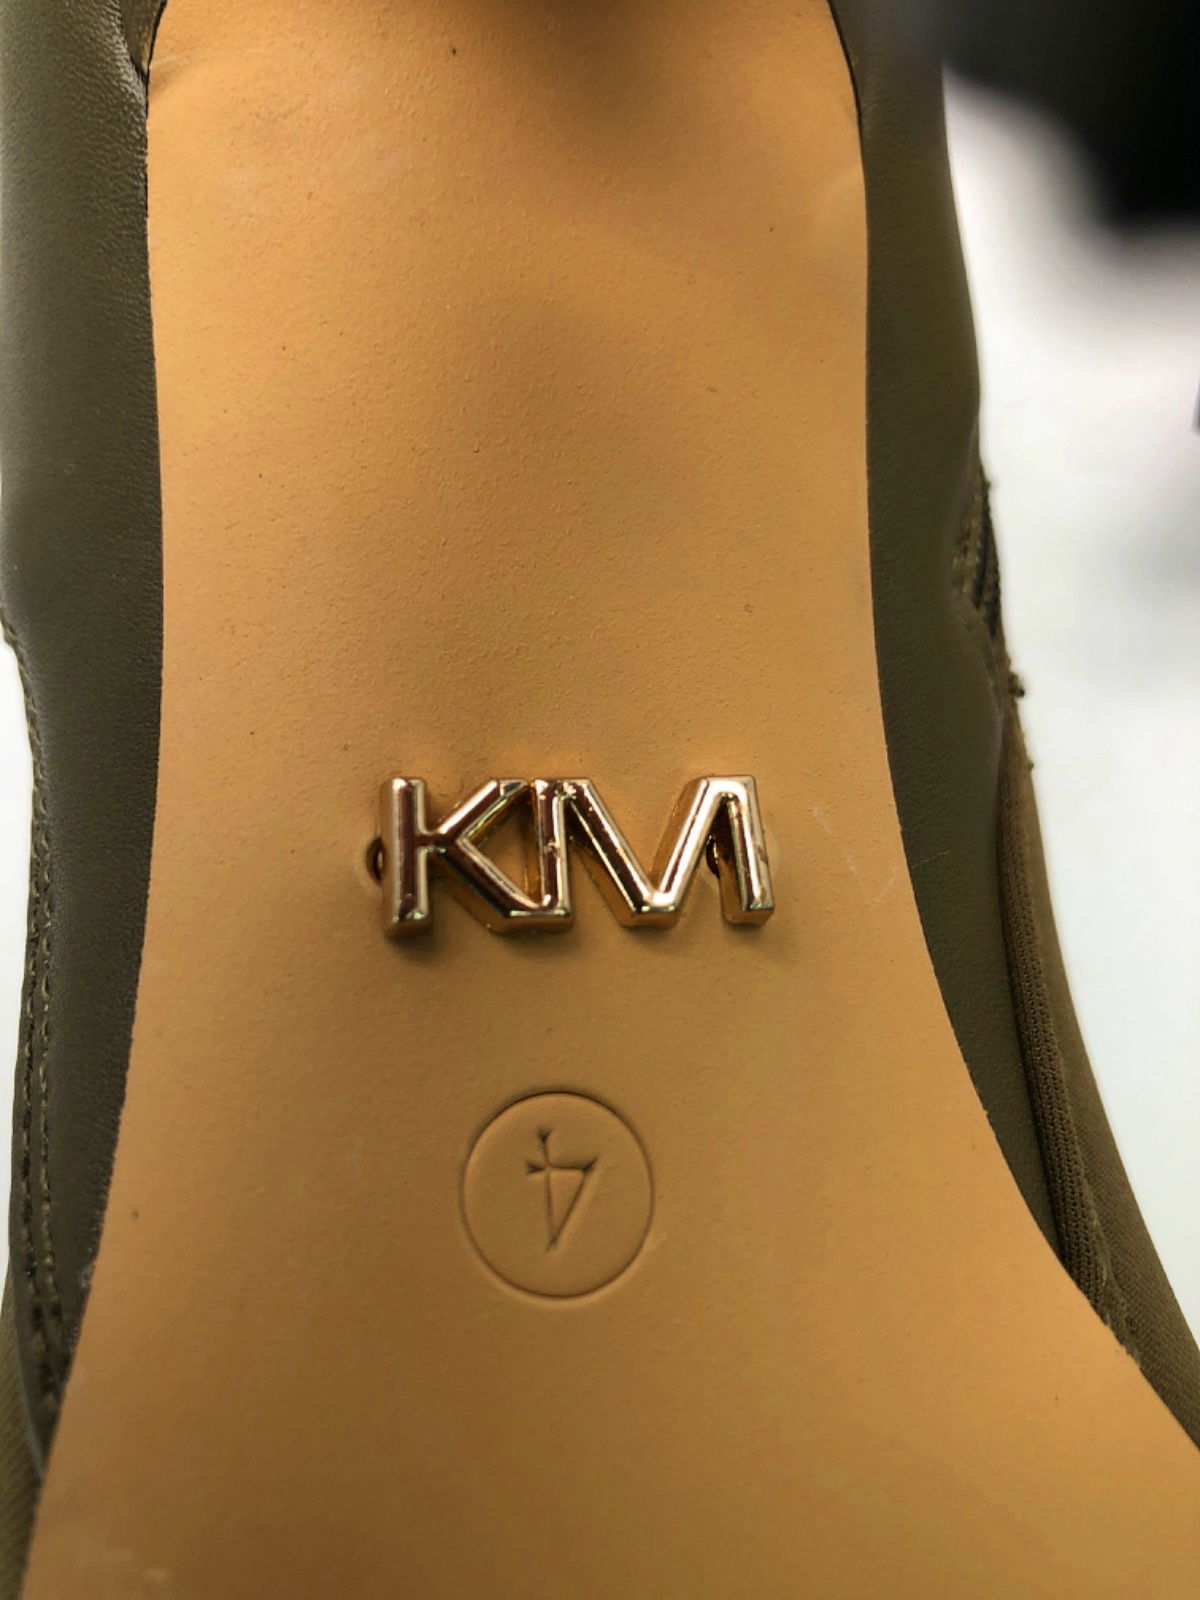 Karen Millen Khaki Pointed Toe High Heel Ankle Boots UK 4